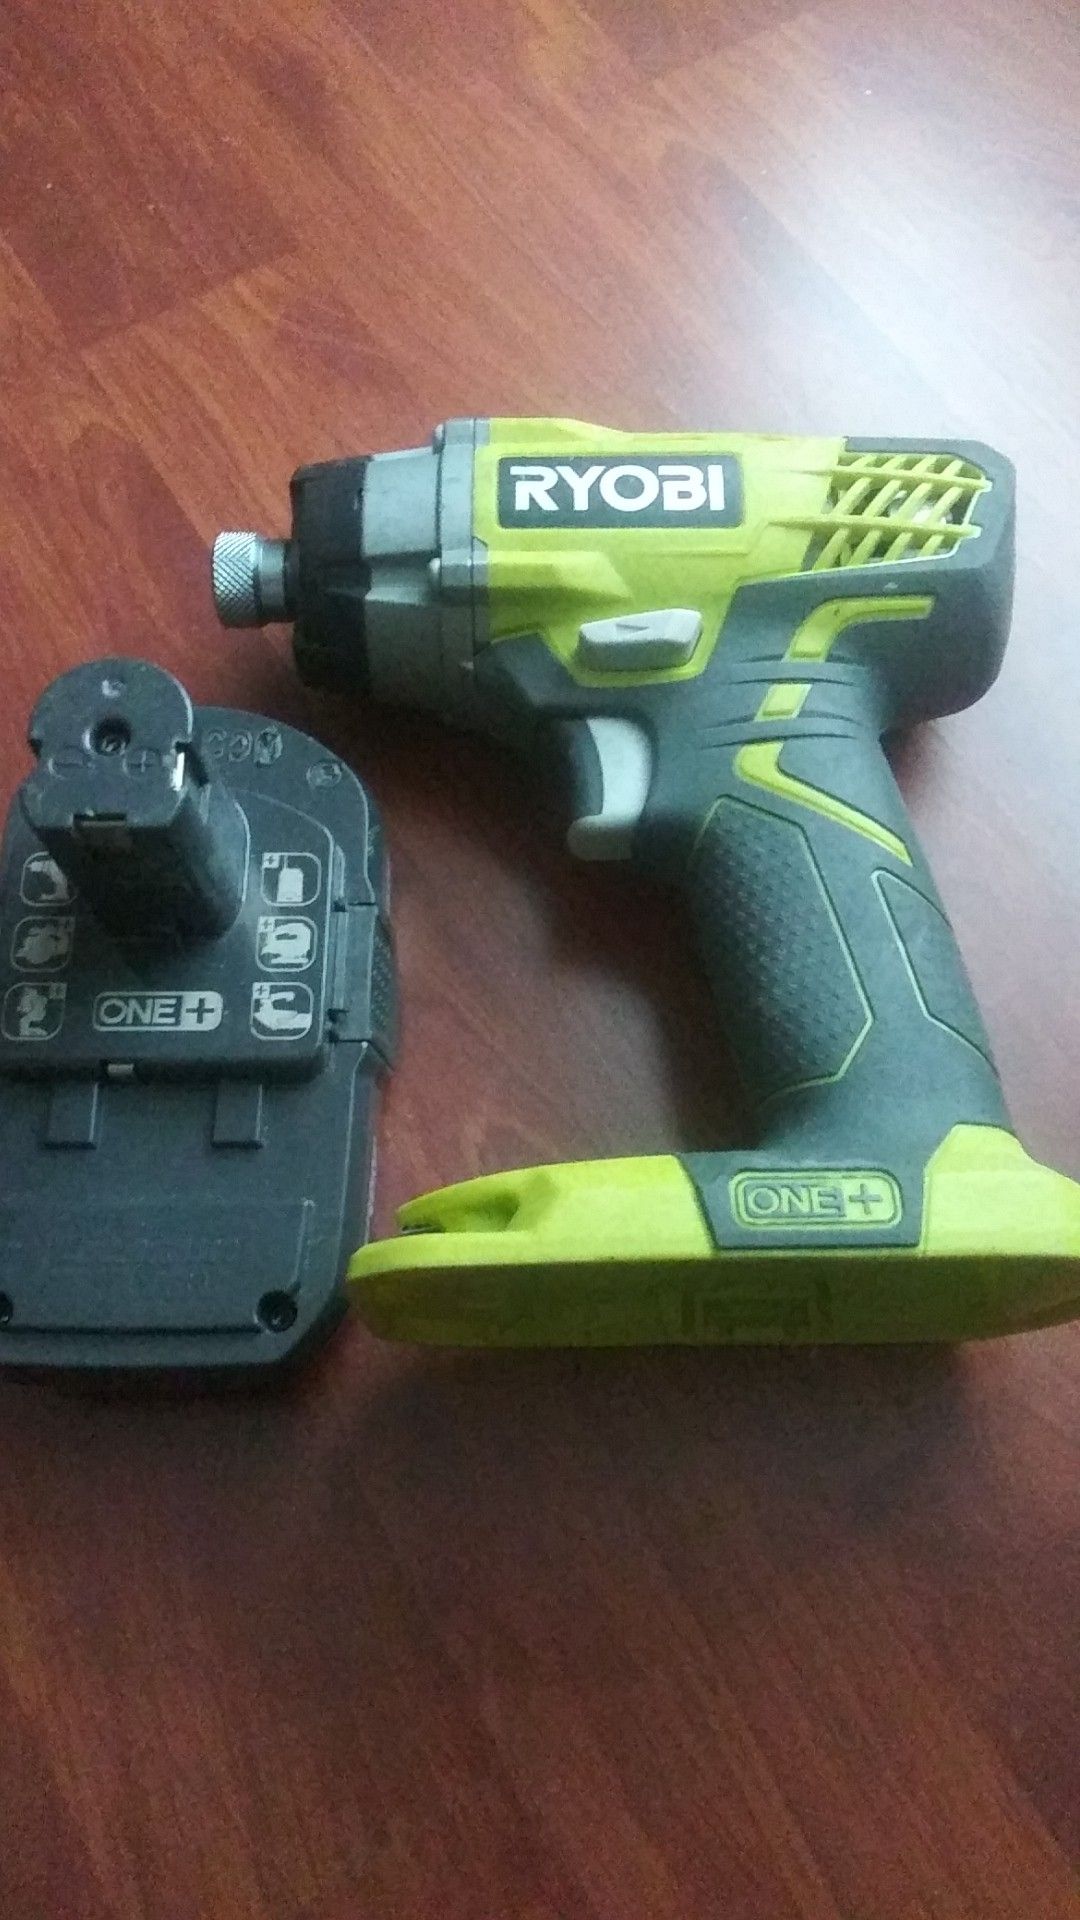 Ryobi 18v impact drill